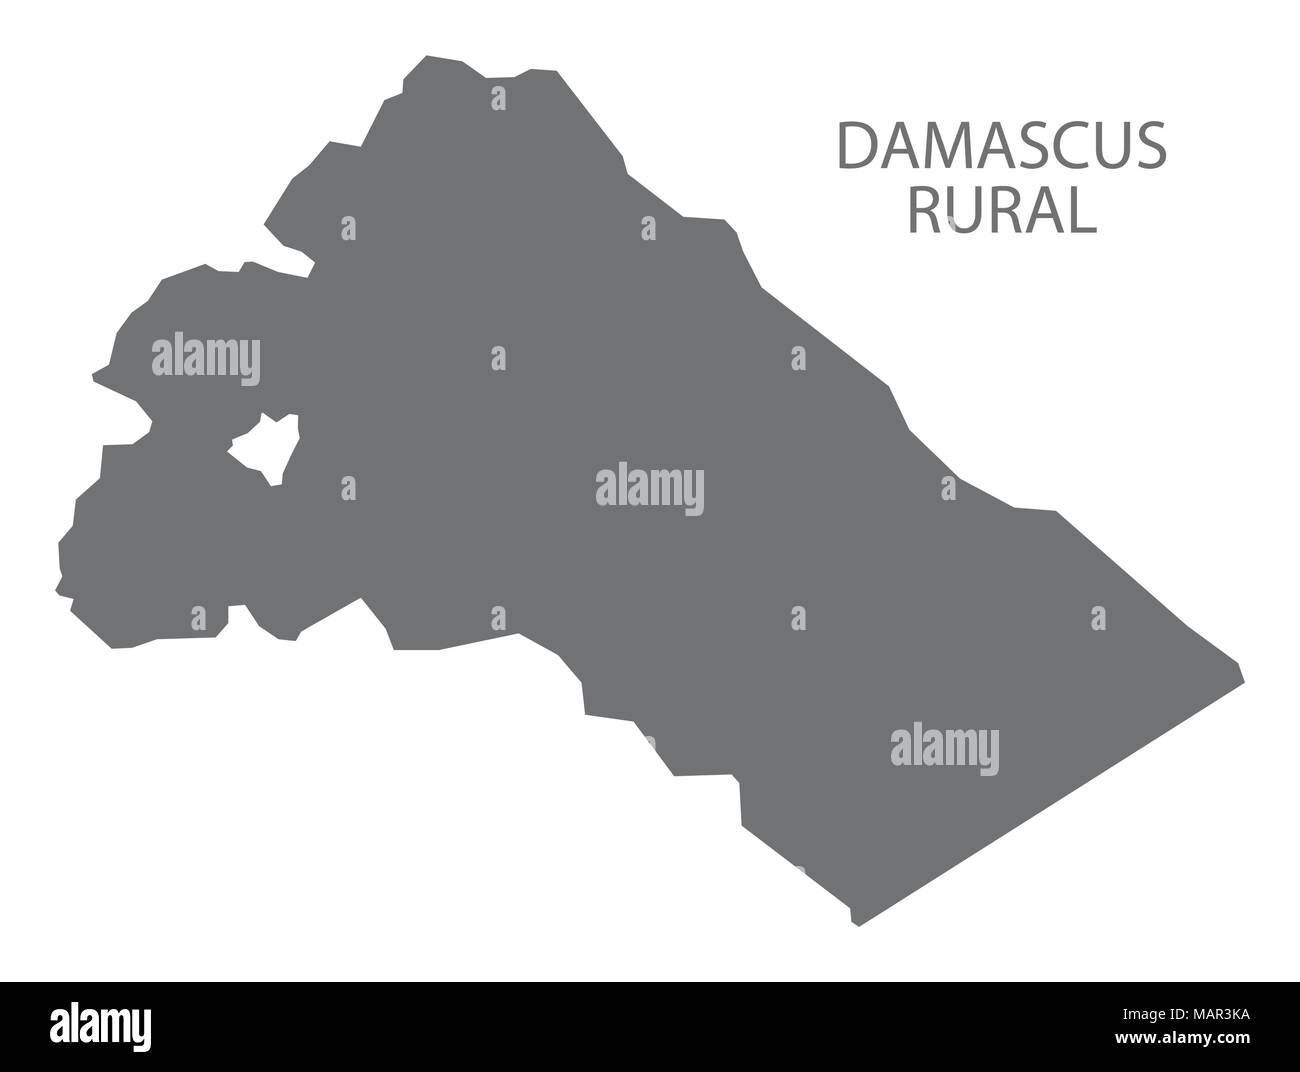 Damascus Rural map of Syria grey illustration shape Stock Vector